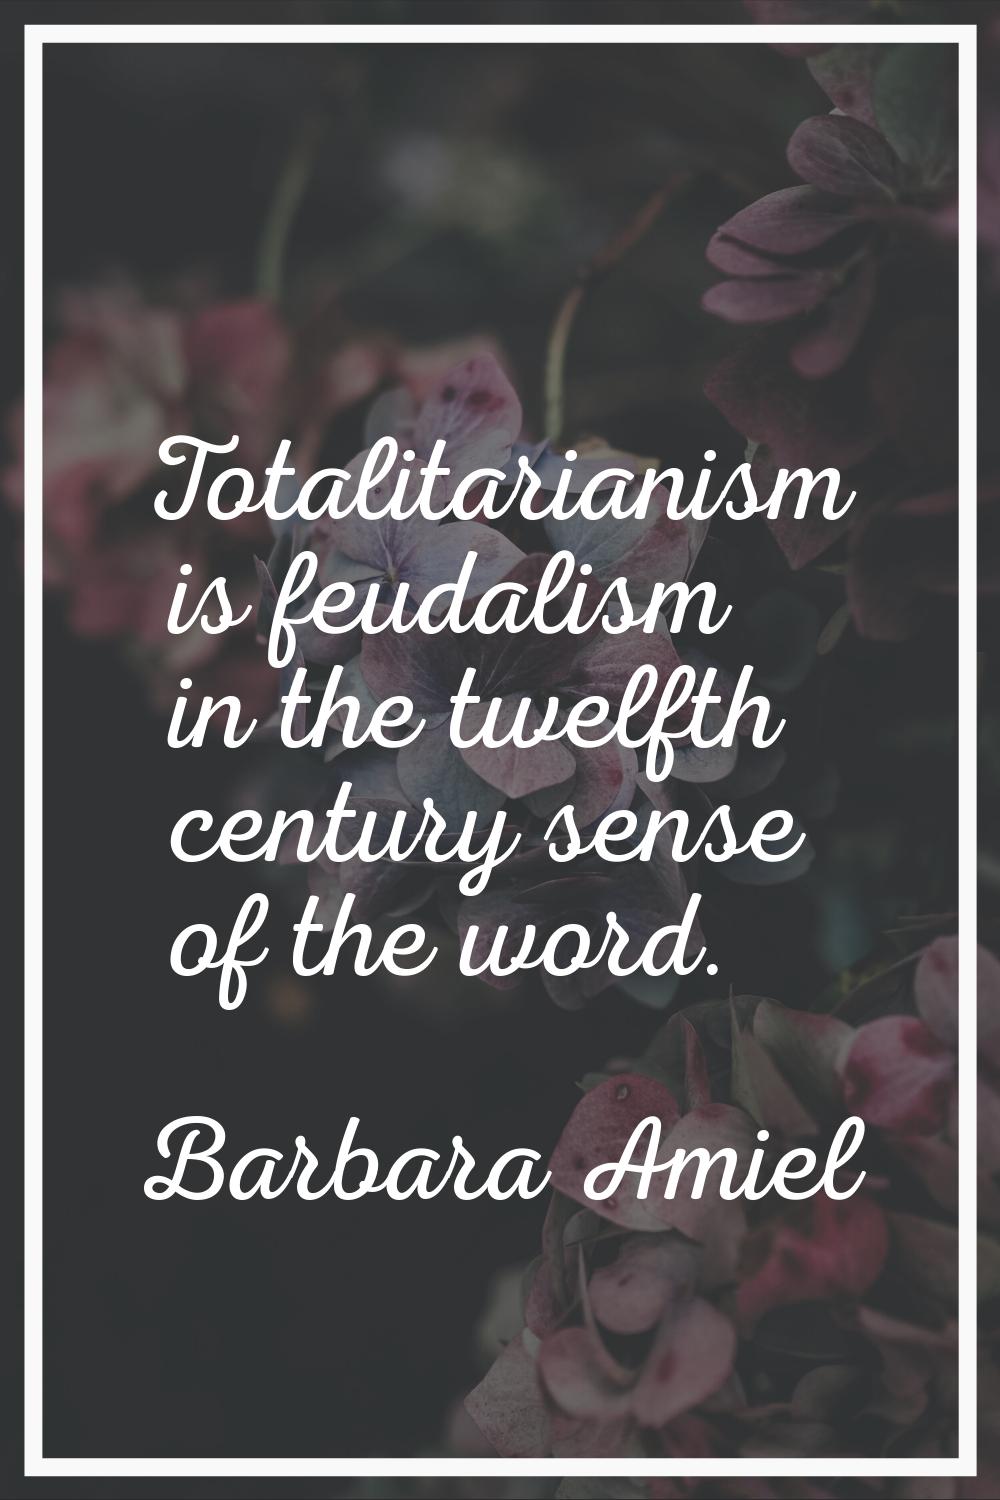 Totalitarianism is feudalism in the twelfth century sense of the word.